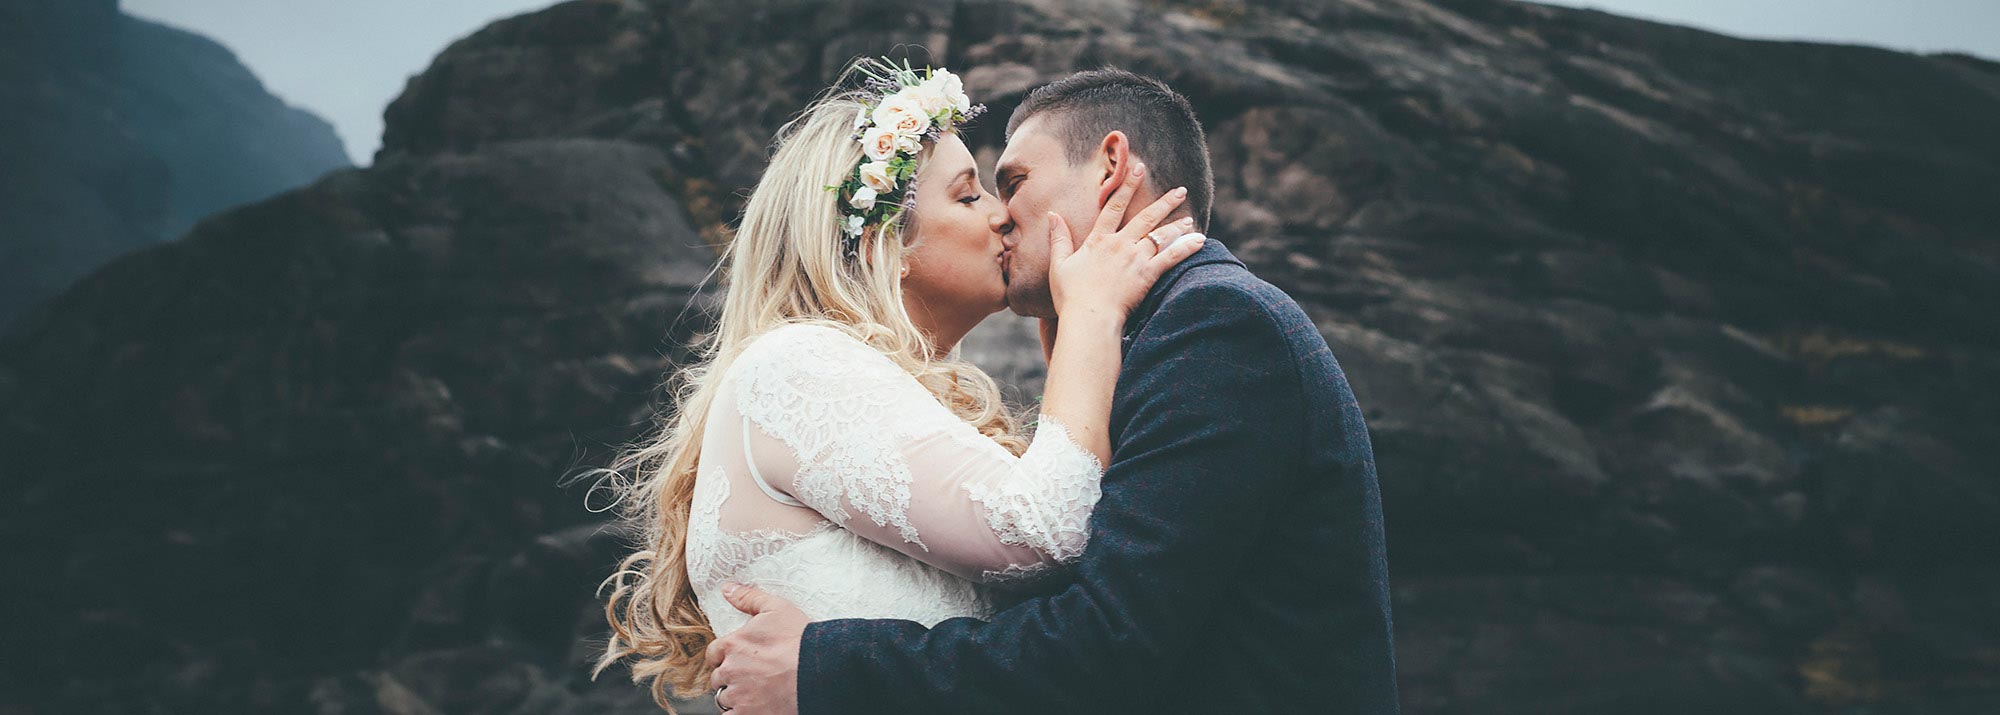 Elopement wedding photography Isle of Skye, Scotland. Wilson McSheffrey Photography